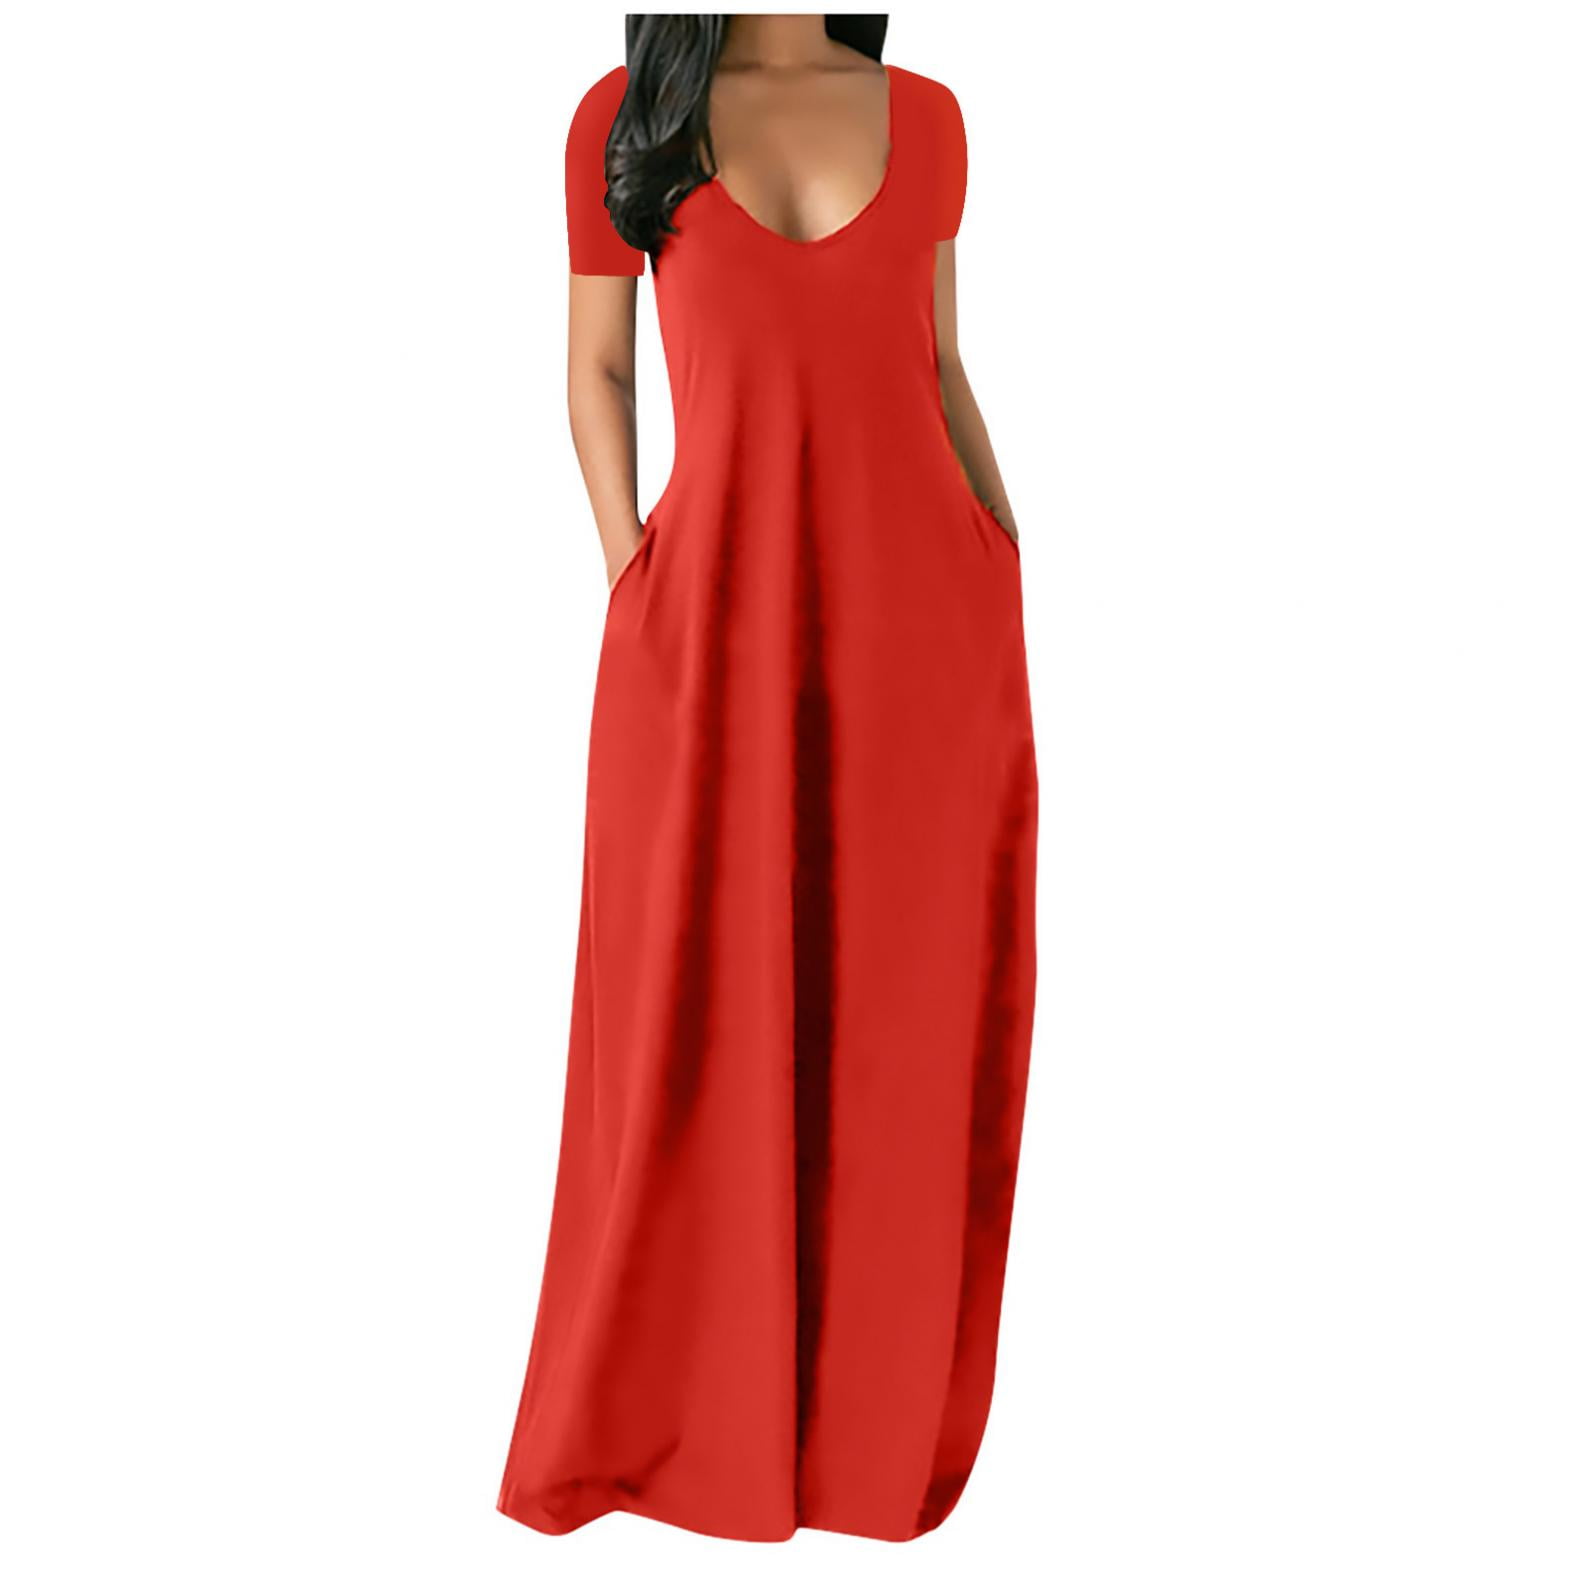 Lenago Women's Plus Size Deep V-Neck Standard-Fit Short Sleeve Solid Maxi Party Dress - image 1 of 6